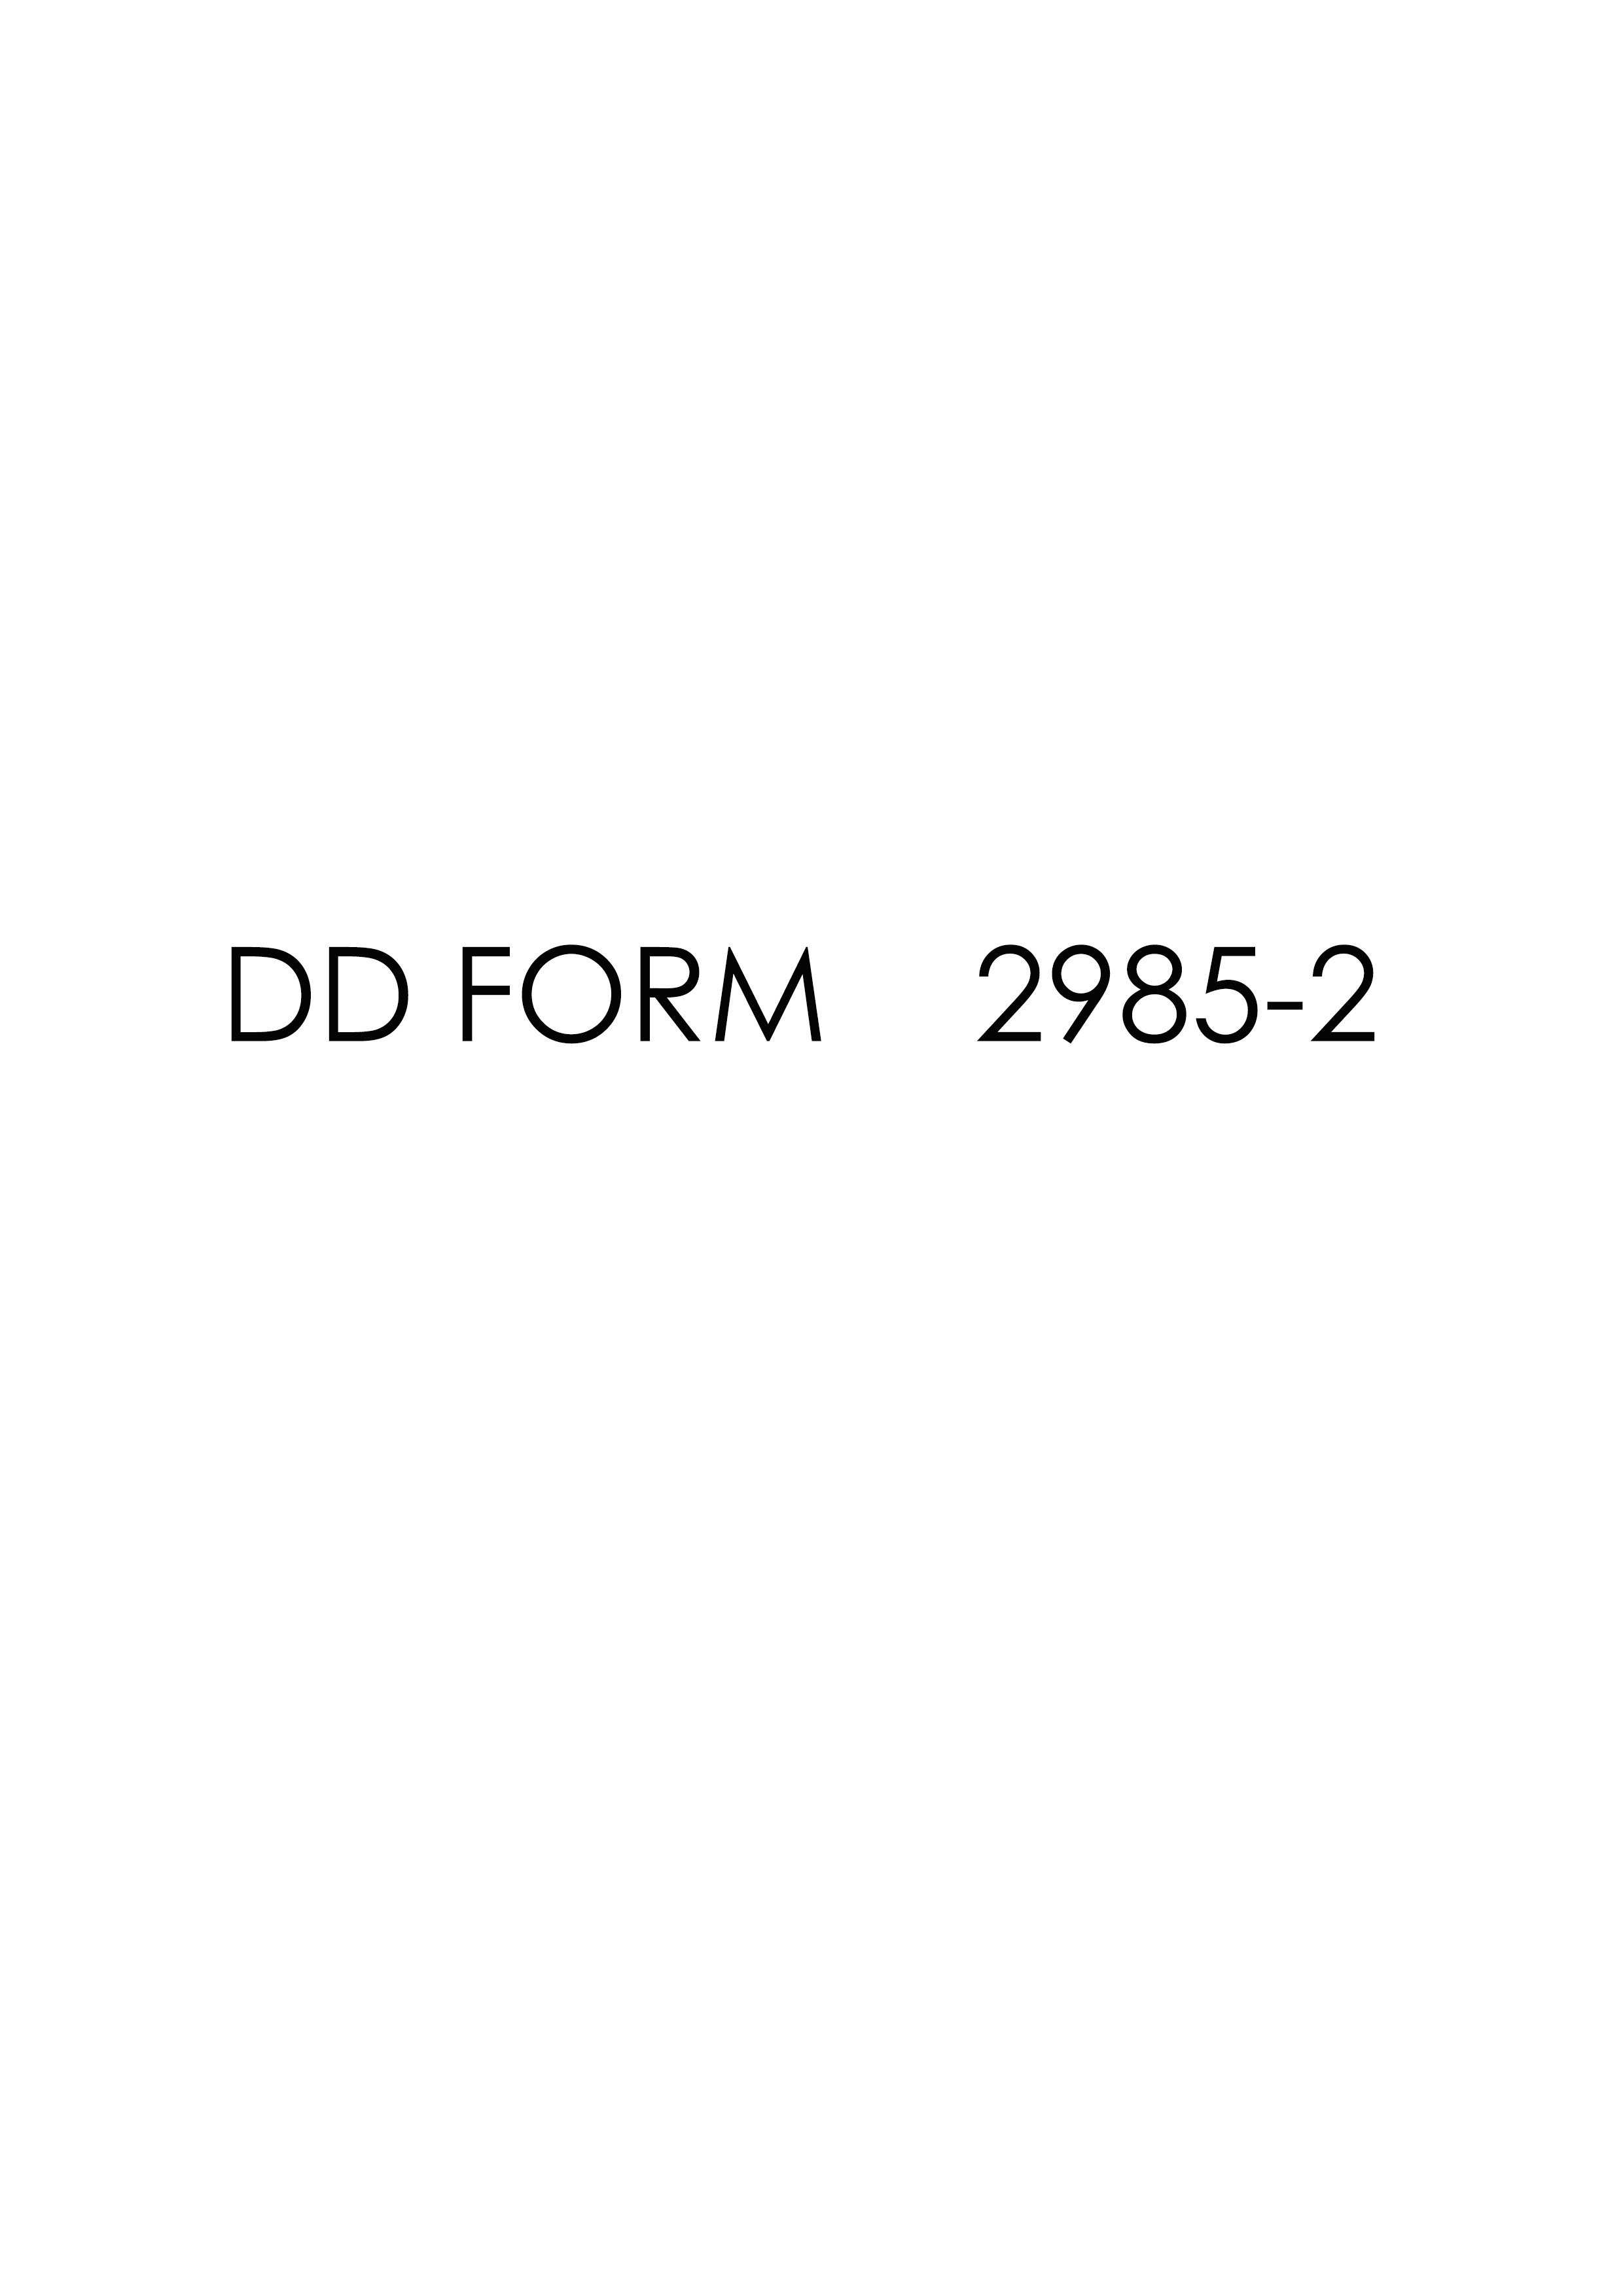 Download dd form 2985-2